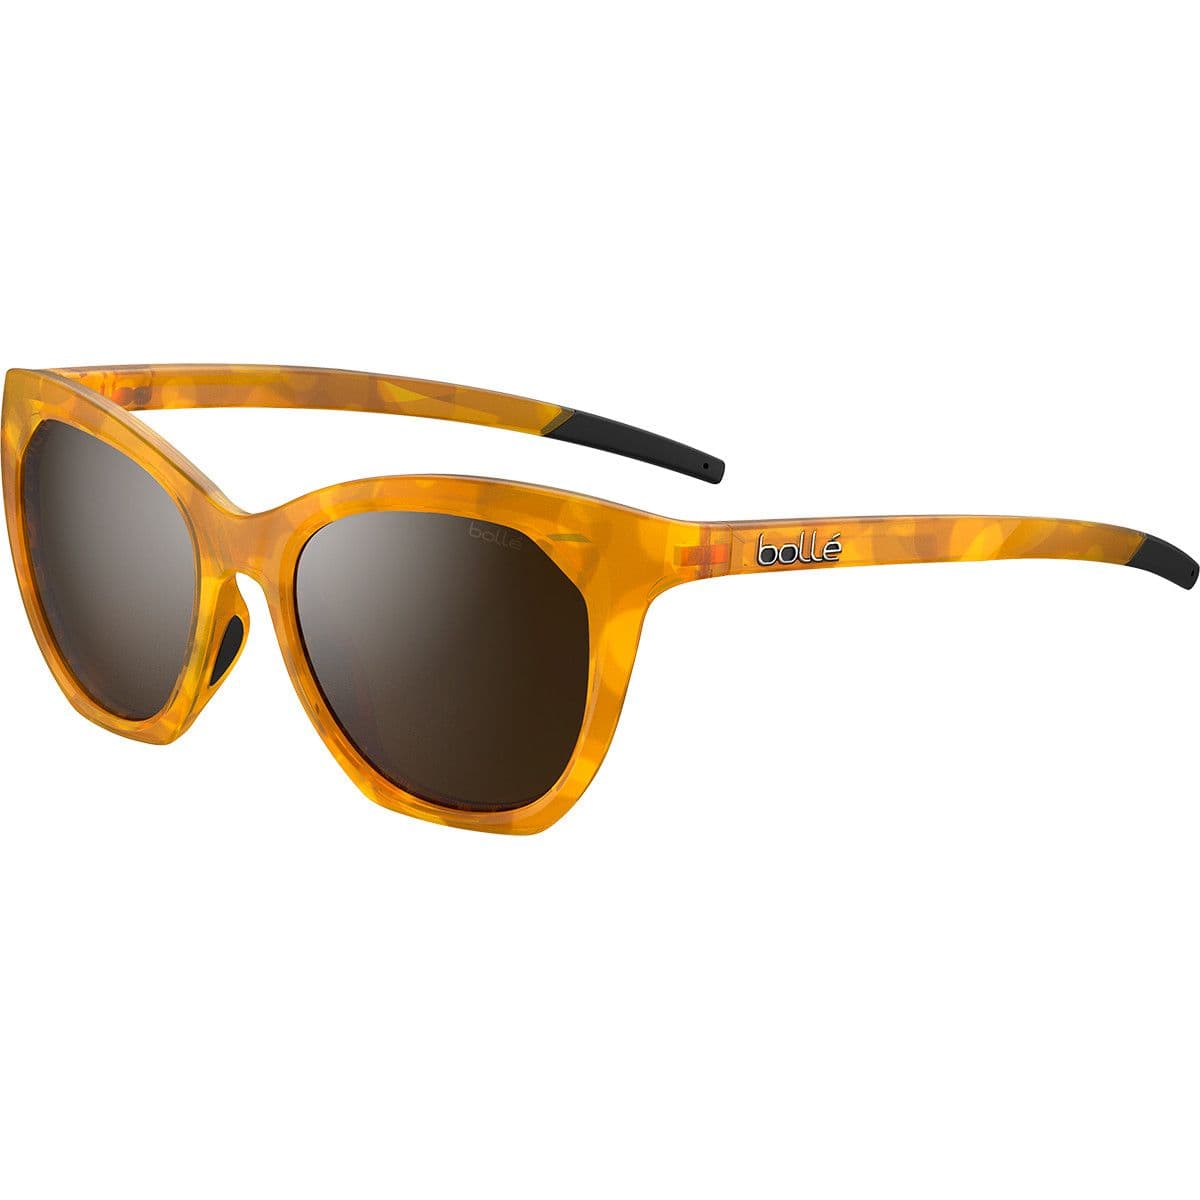 Bolle Prize Sunglasses